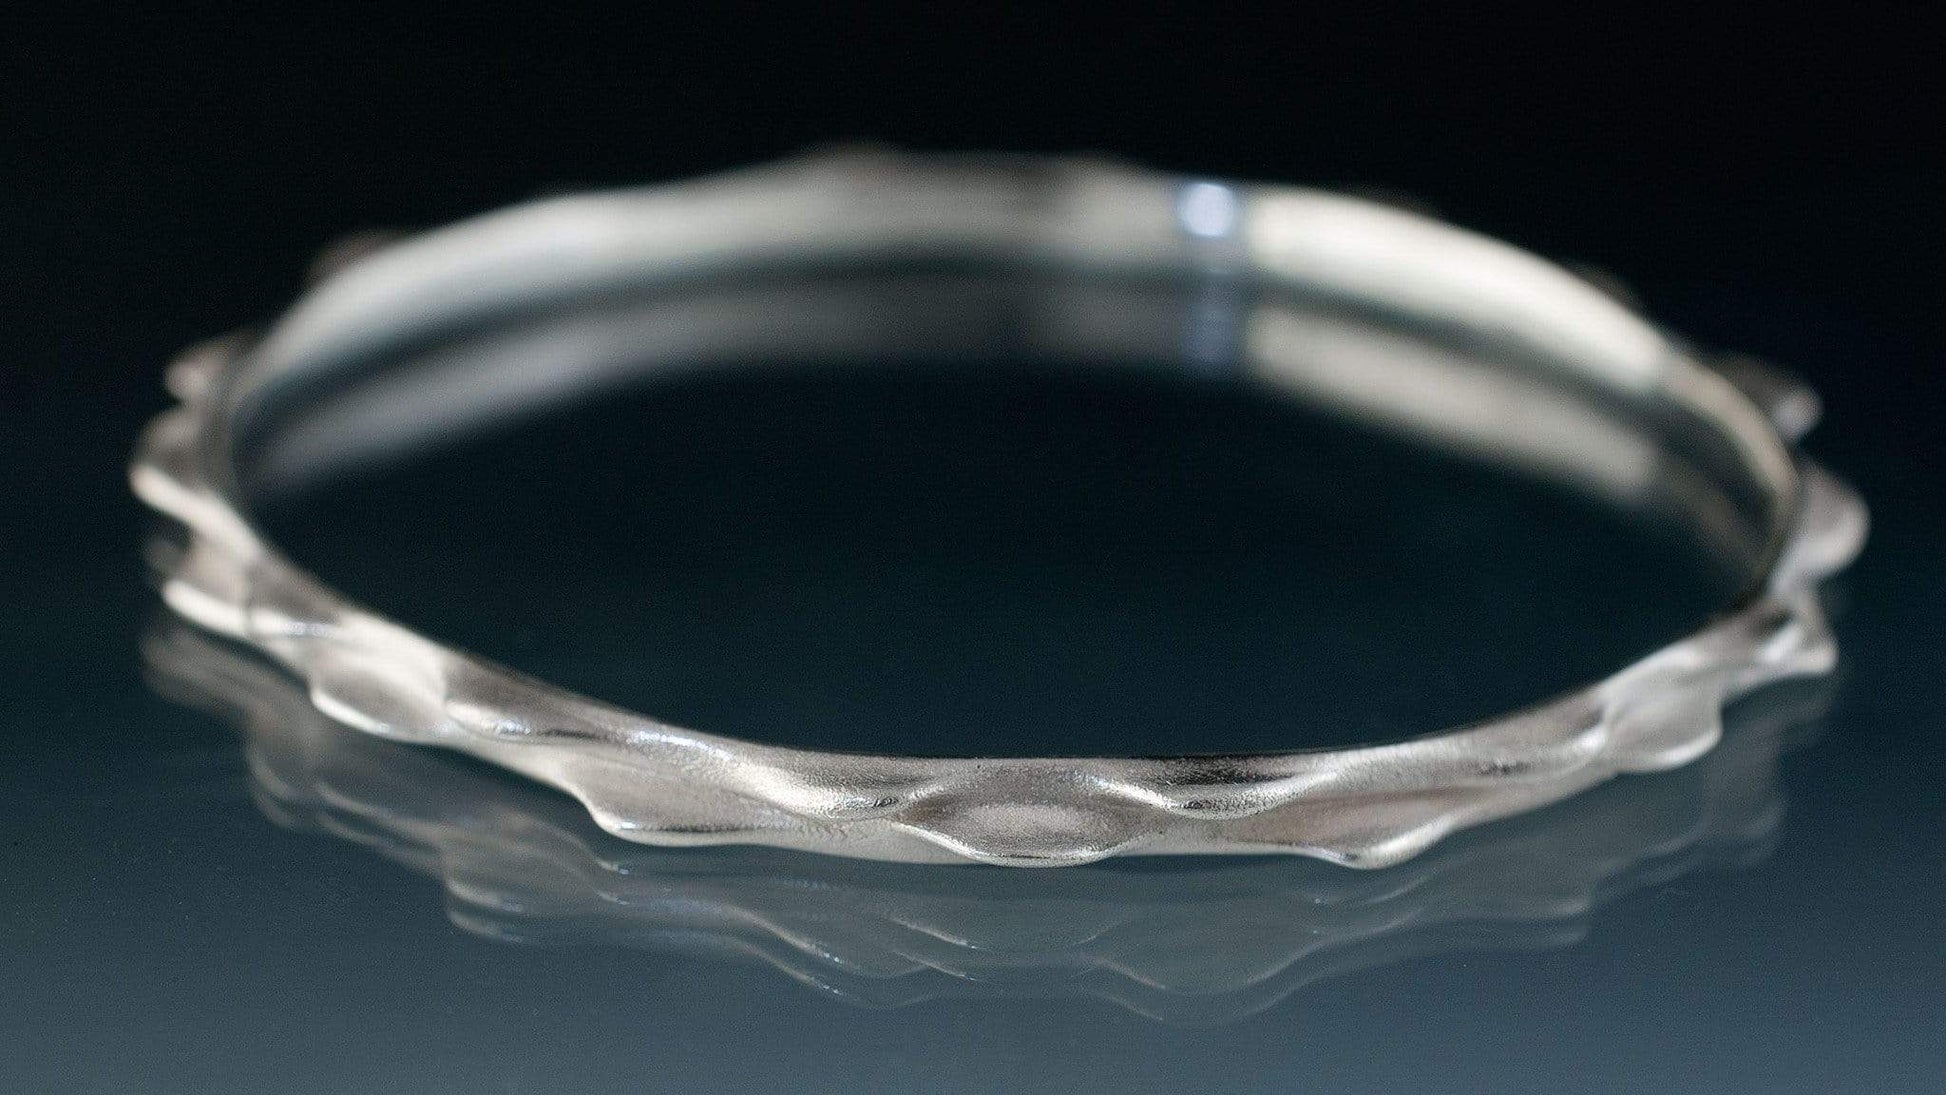 Bumpy Bracelet Bangle 3D Printed and Cast Oxidized Sterling Silver Bangle, Ready to Ship Medium 2.5"/63mm / Dark Oxidized Silver Bracelet by Nodeform